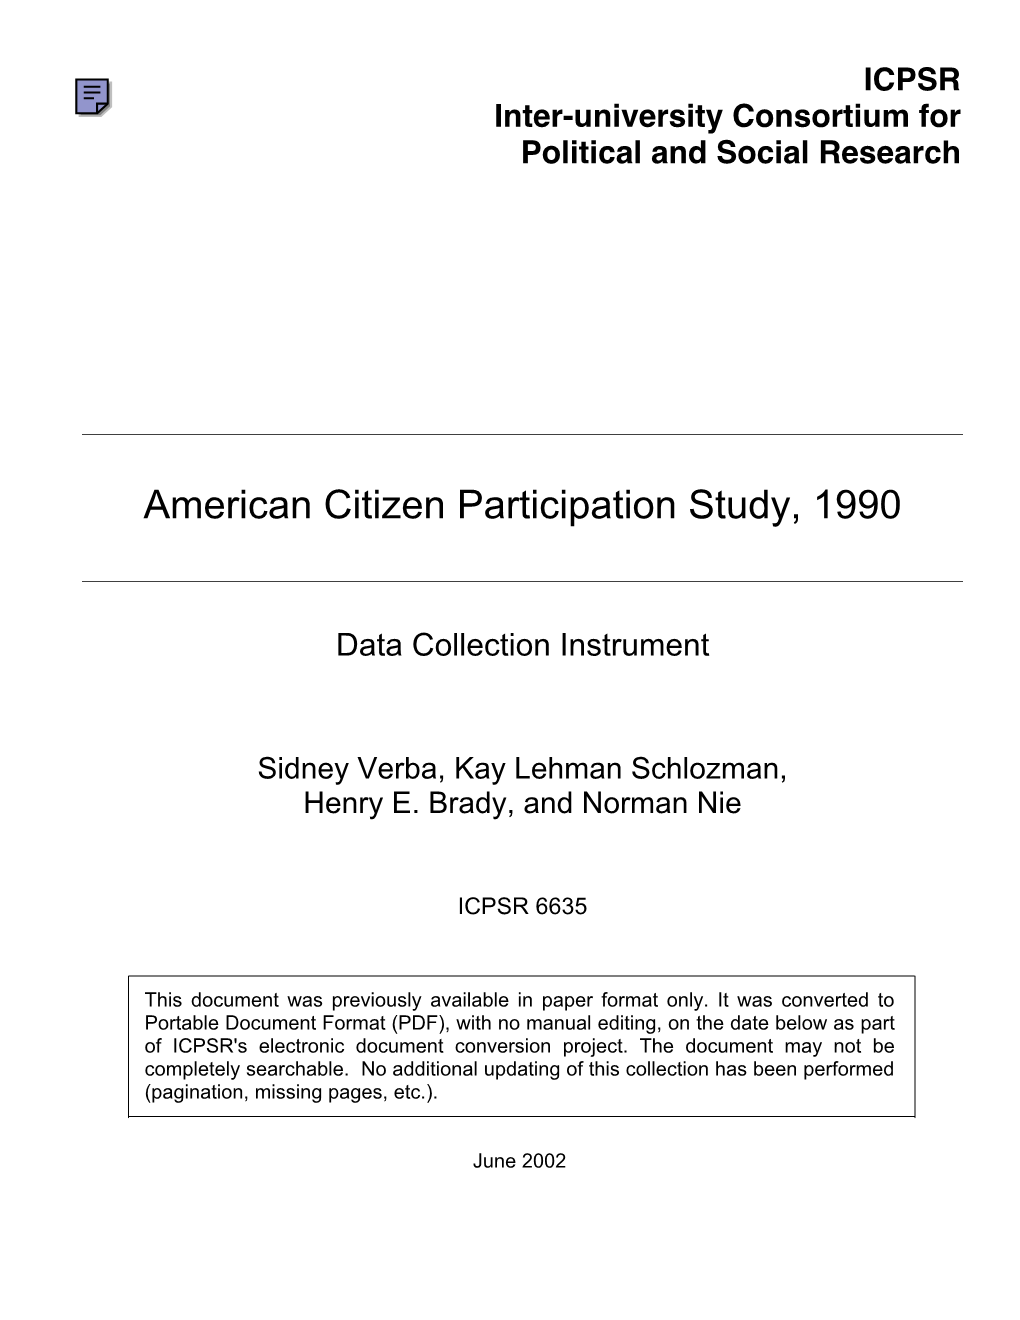 American Citizen Participation Study, 1990 Data Collection Instrument